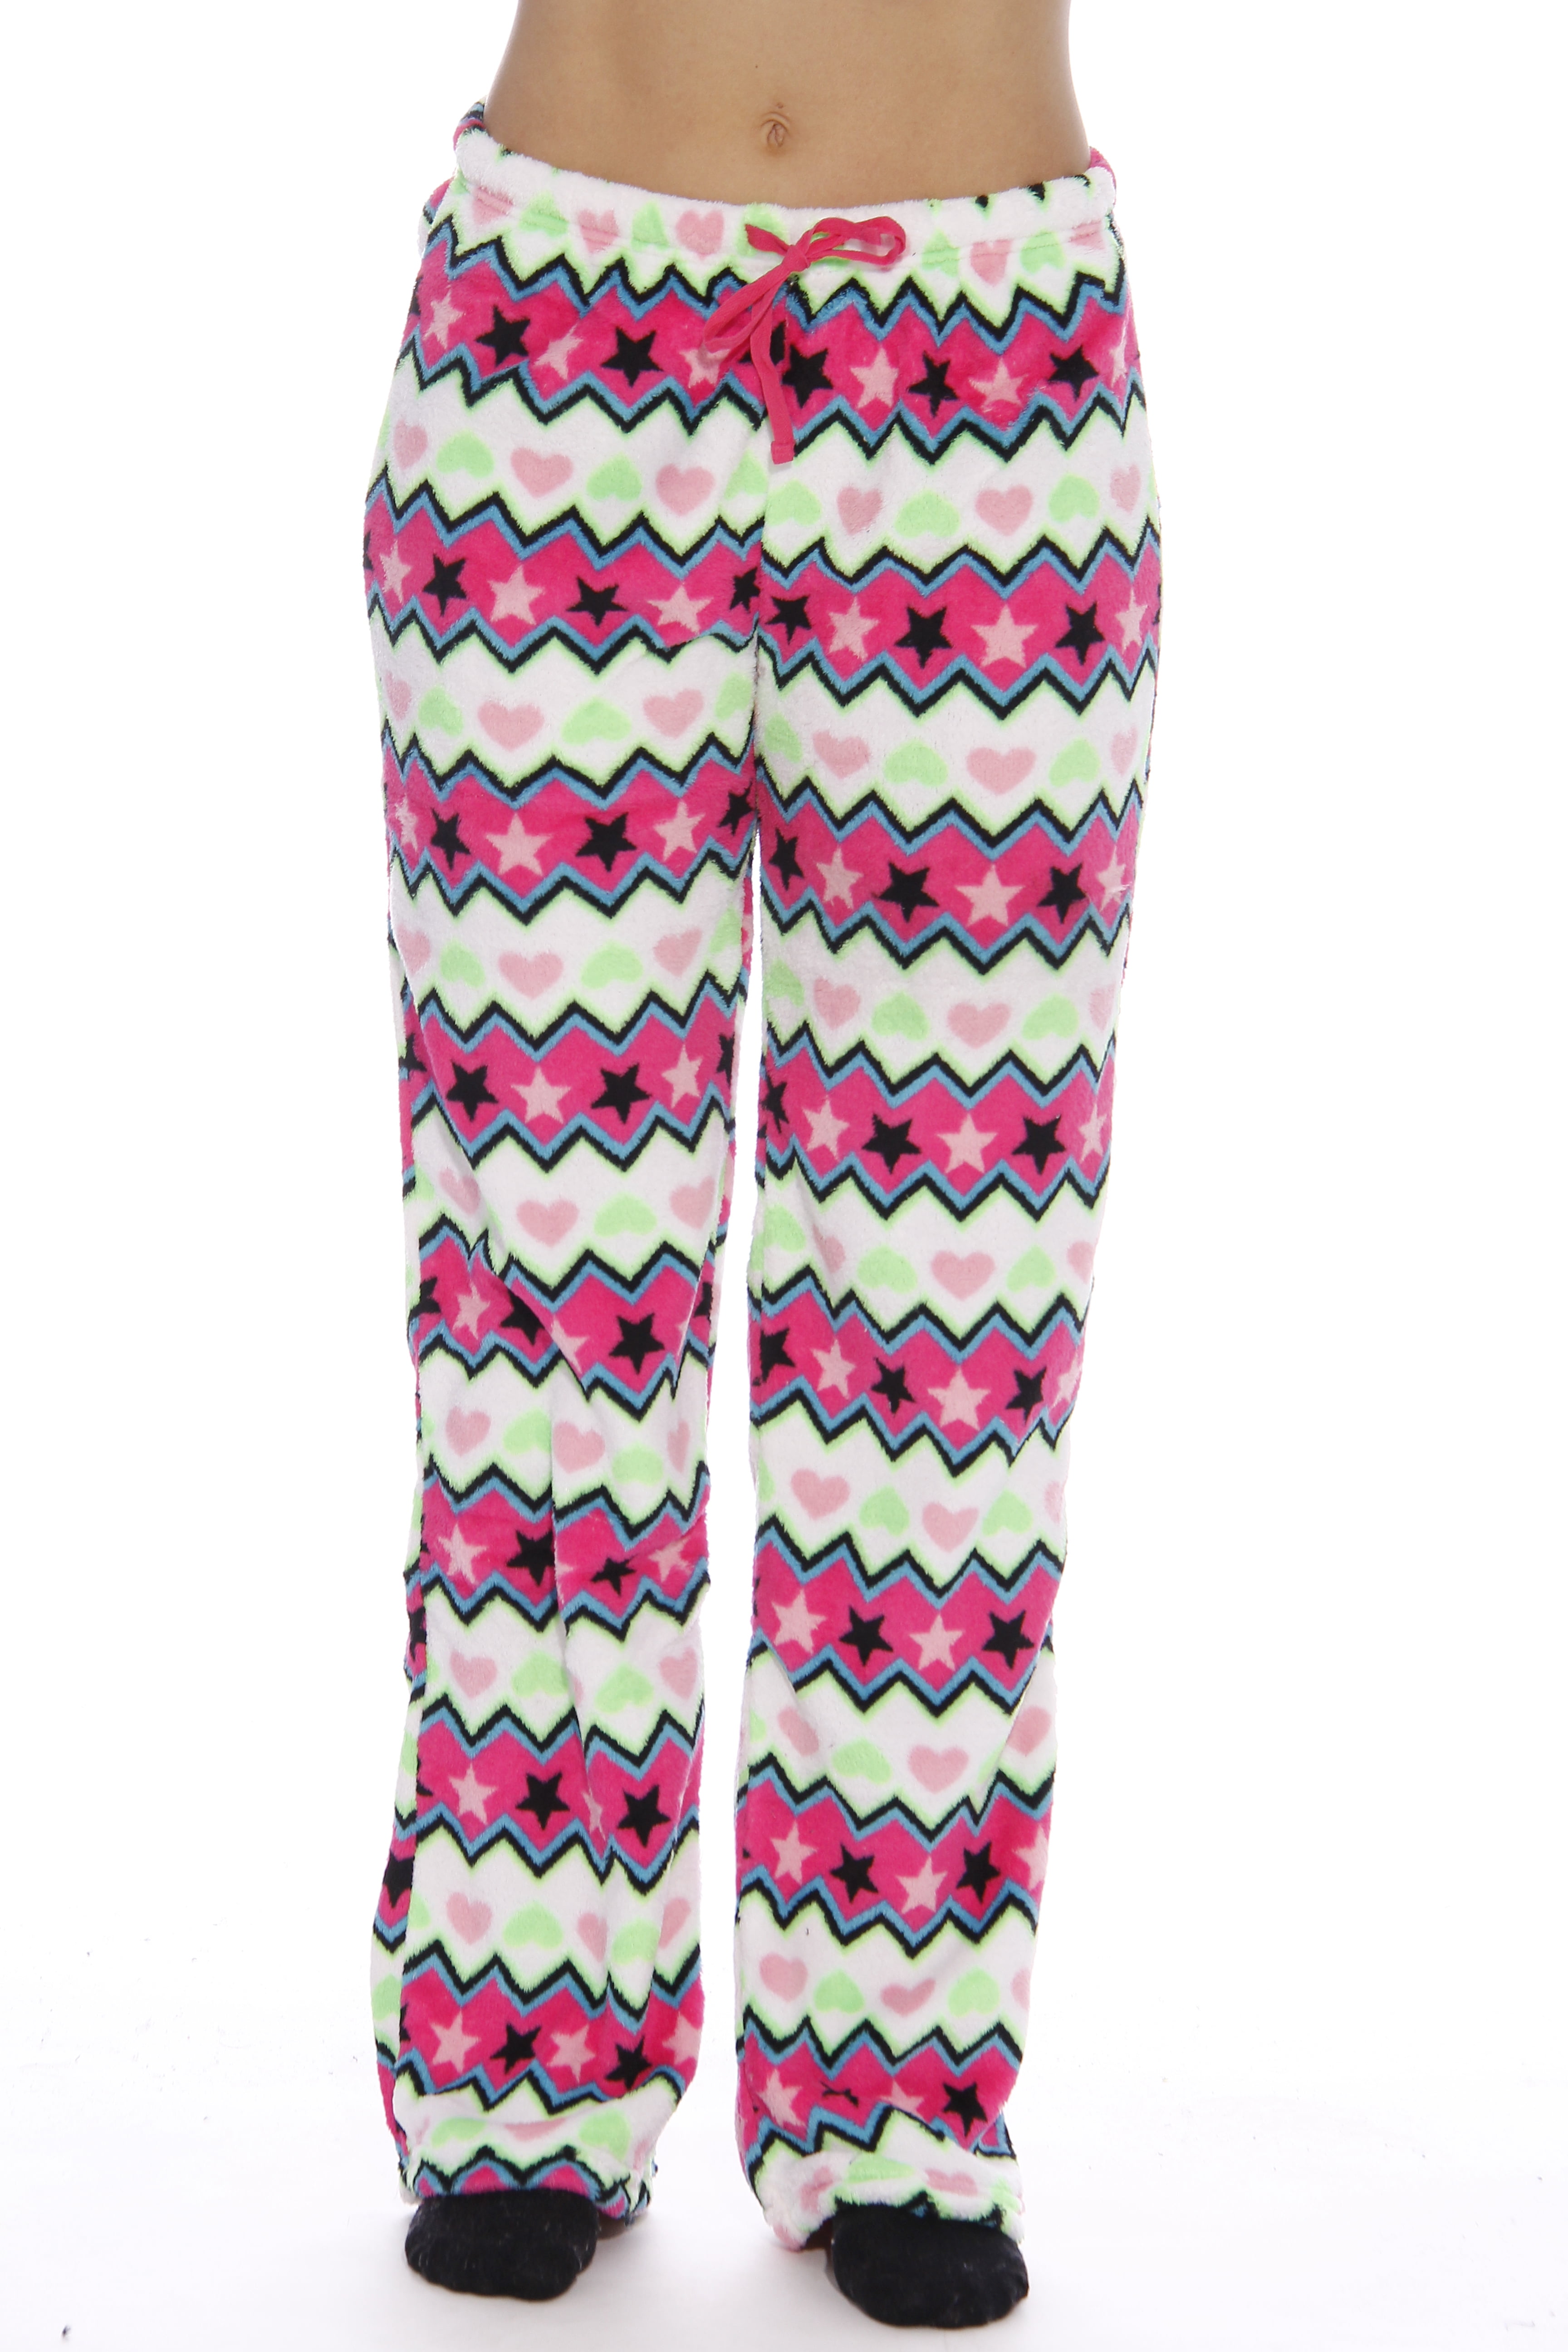 Just Love - Just Love Women's Plush Pajama Pants - Petite to Plus Size ...